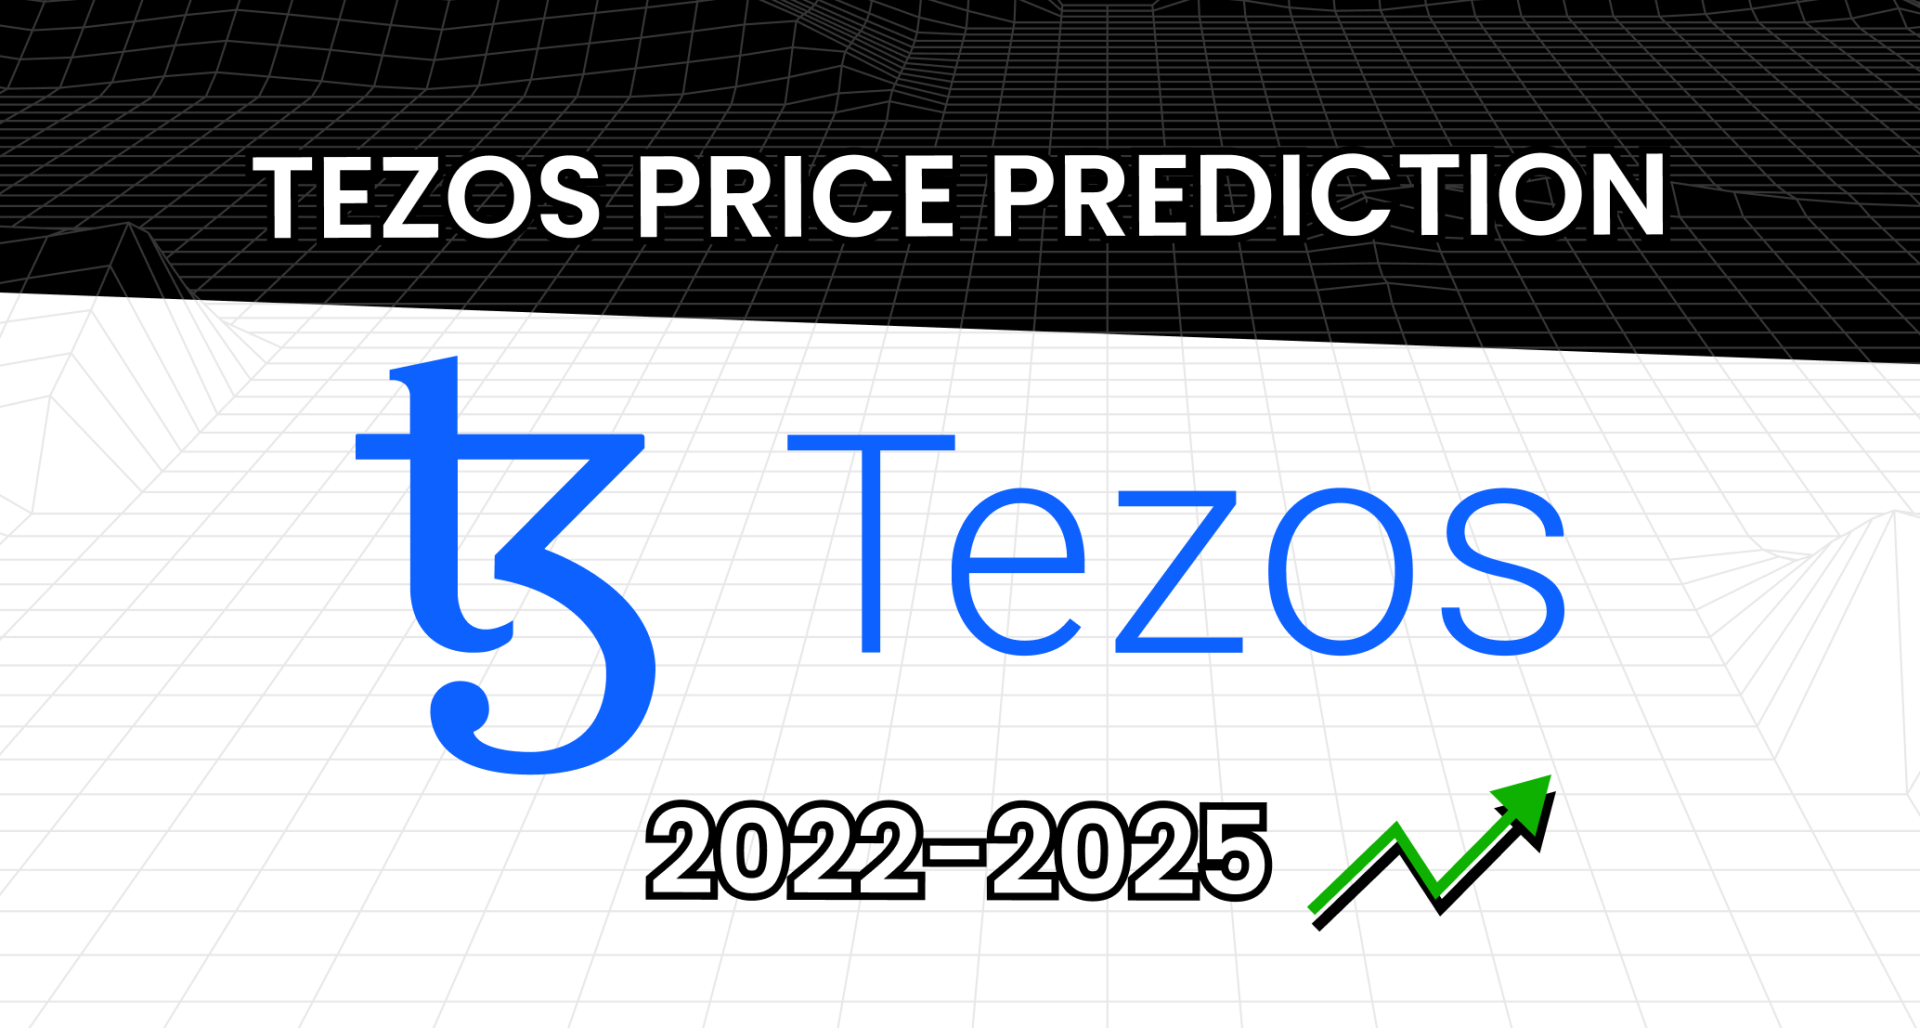 Tezos price prediction